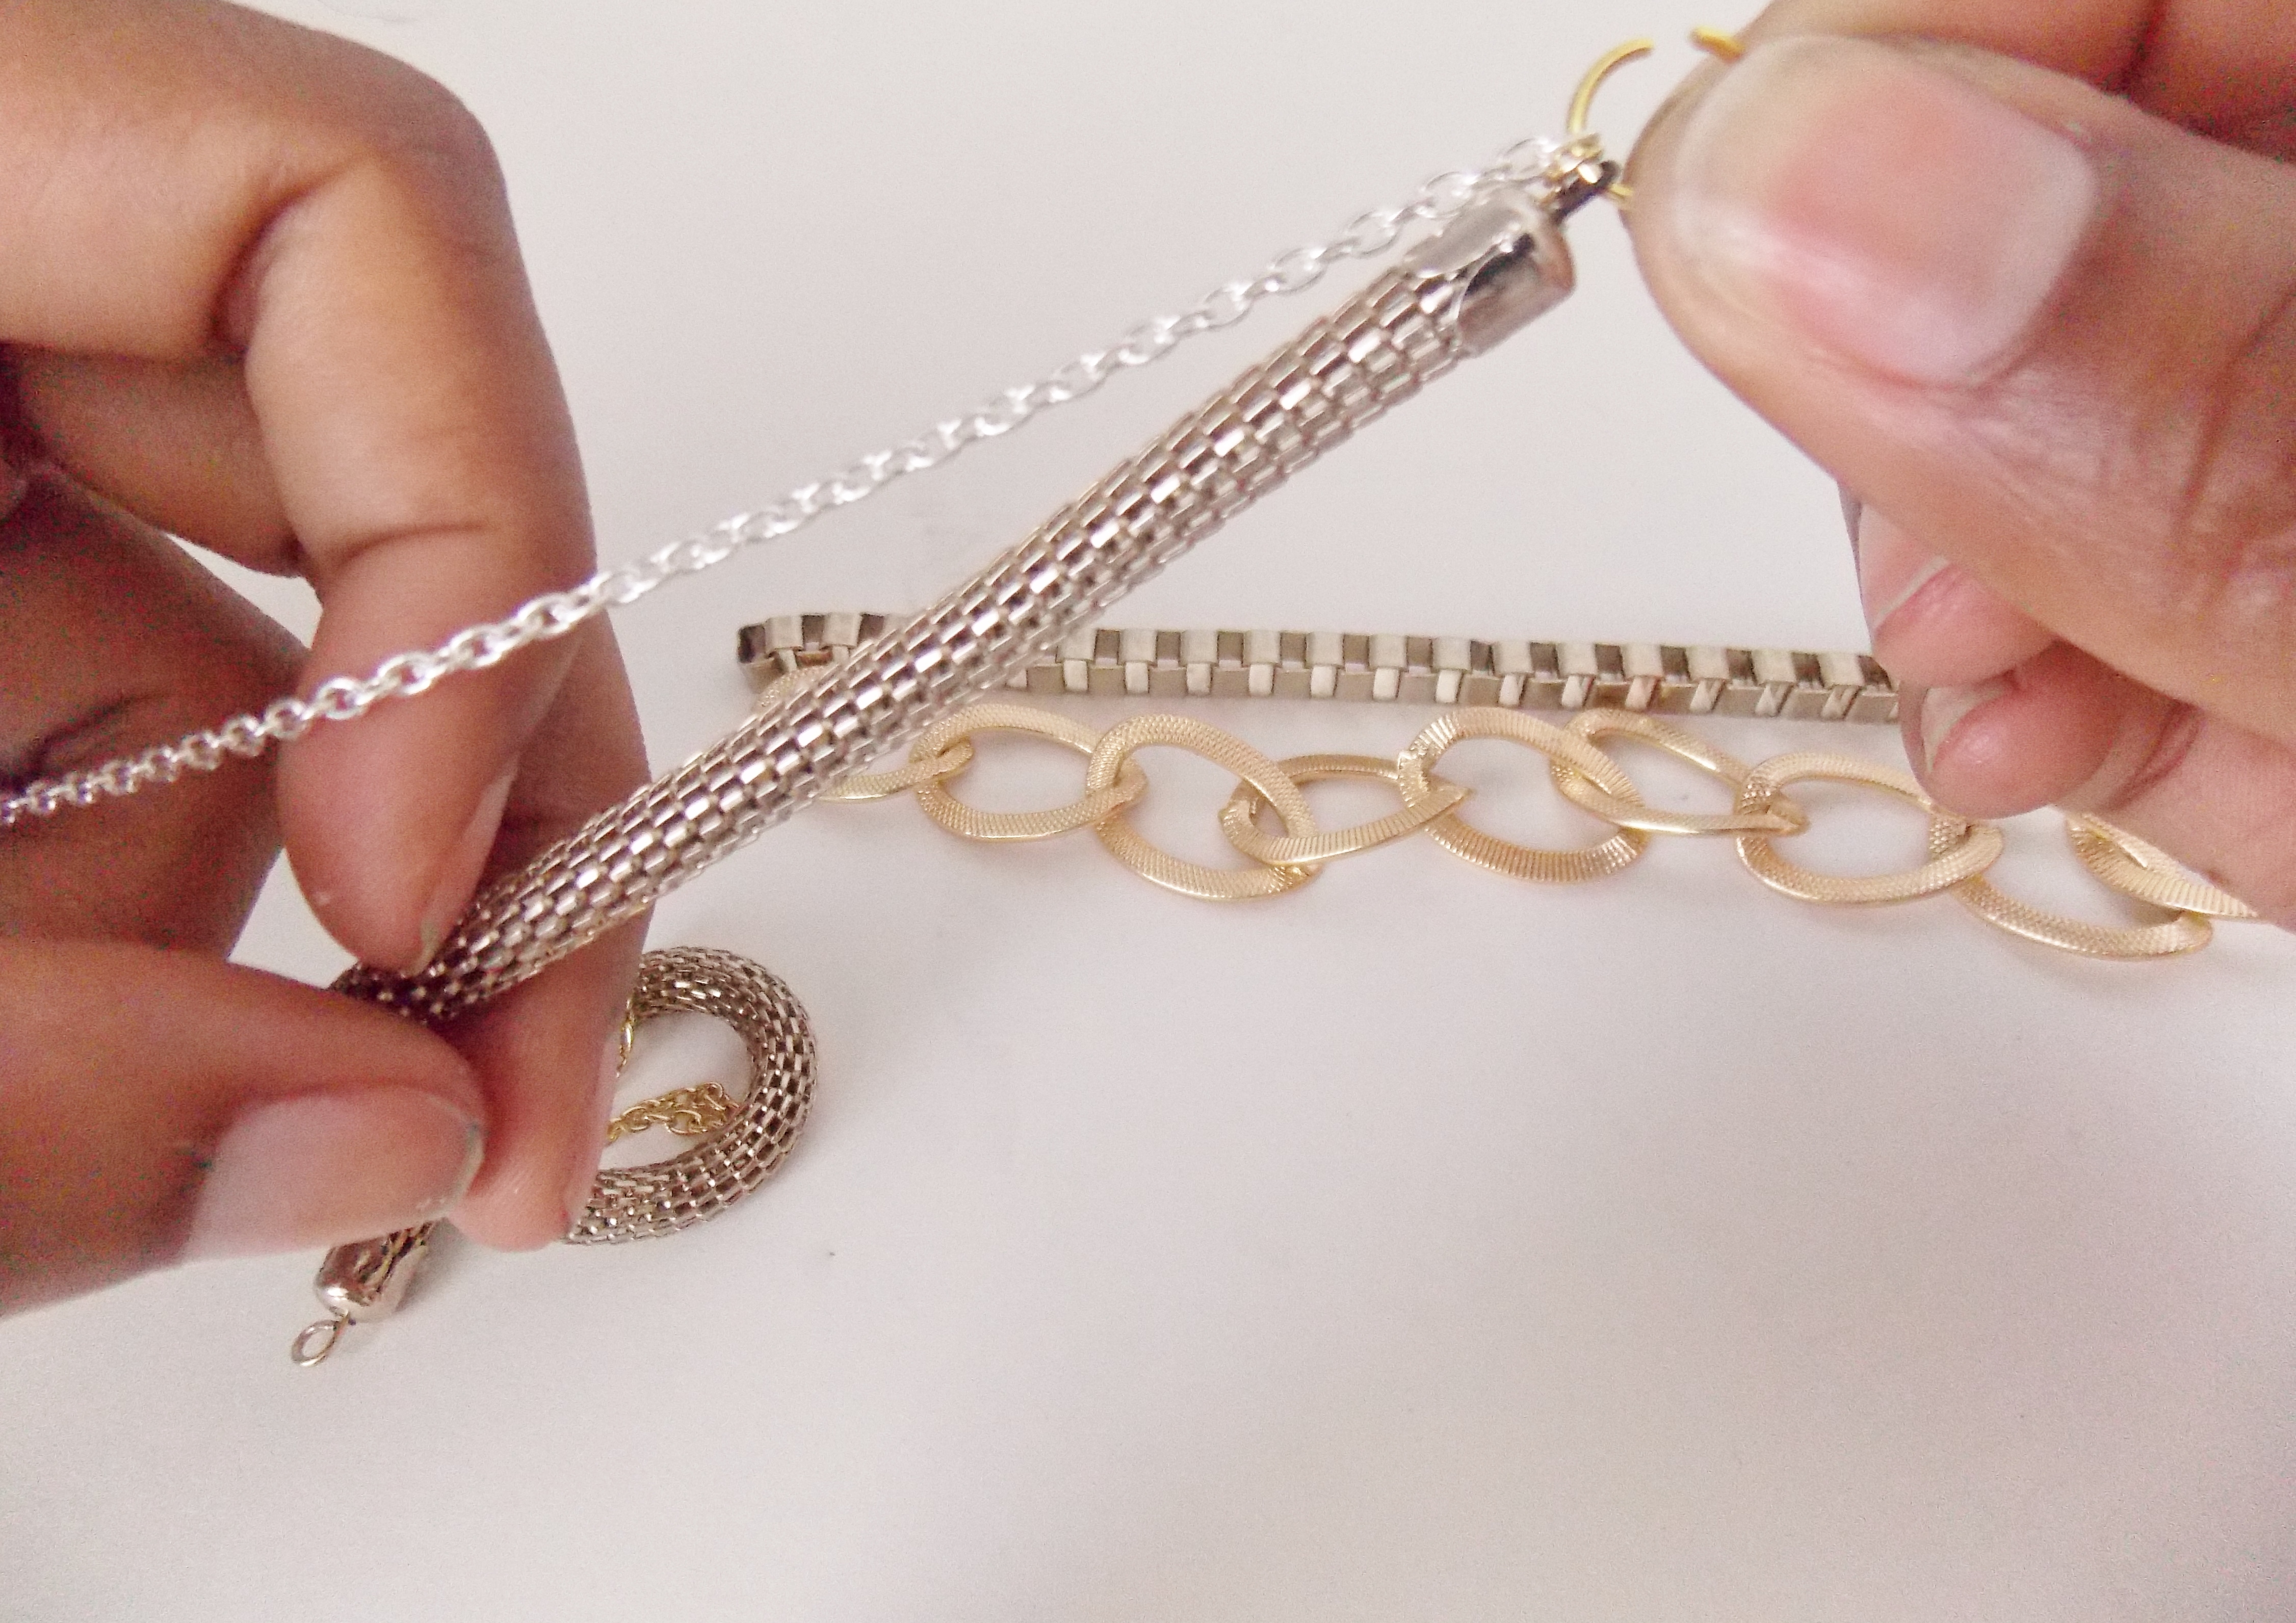 DIY: Mixed Chain Bracelet | Why Buy it? DIY it.